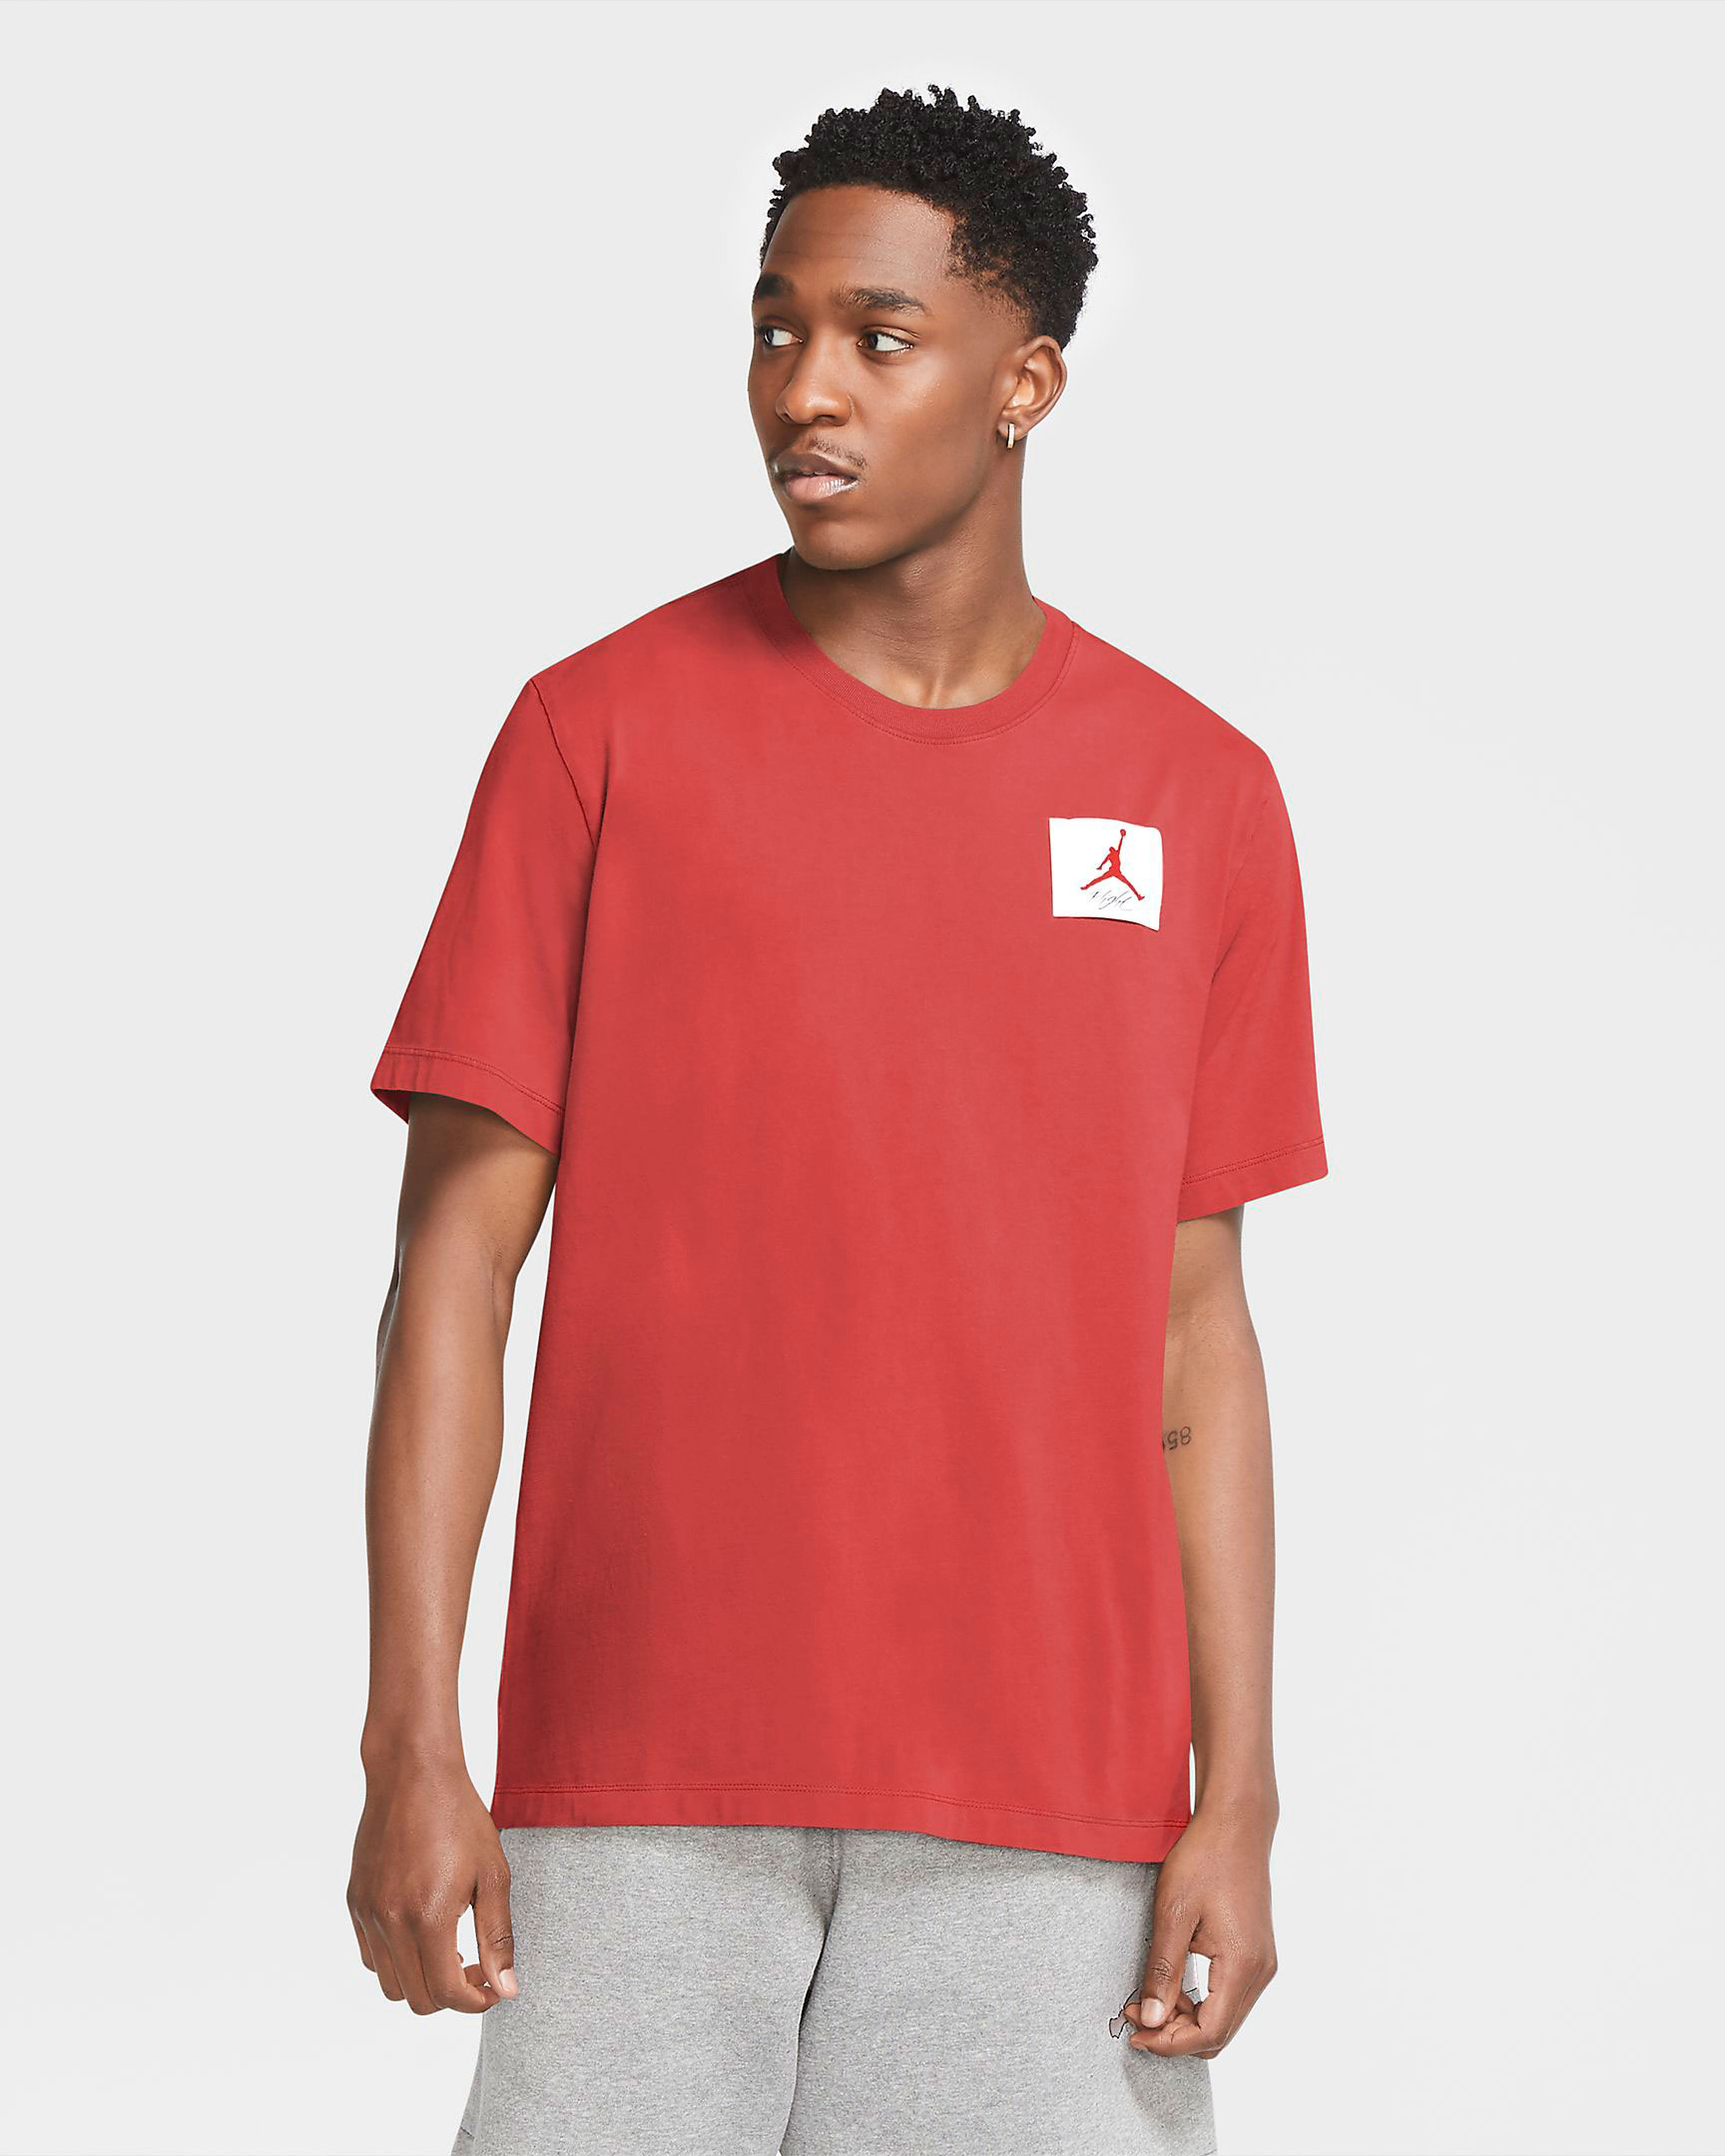 union-air-jordan-4-matching-shirt